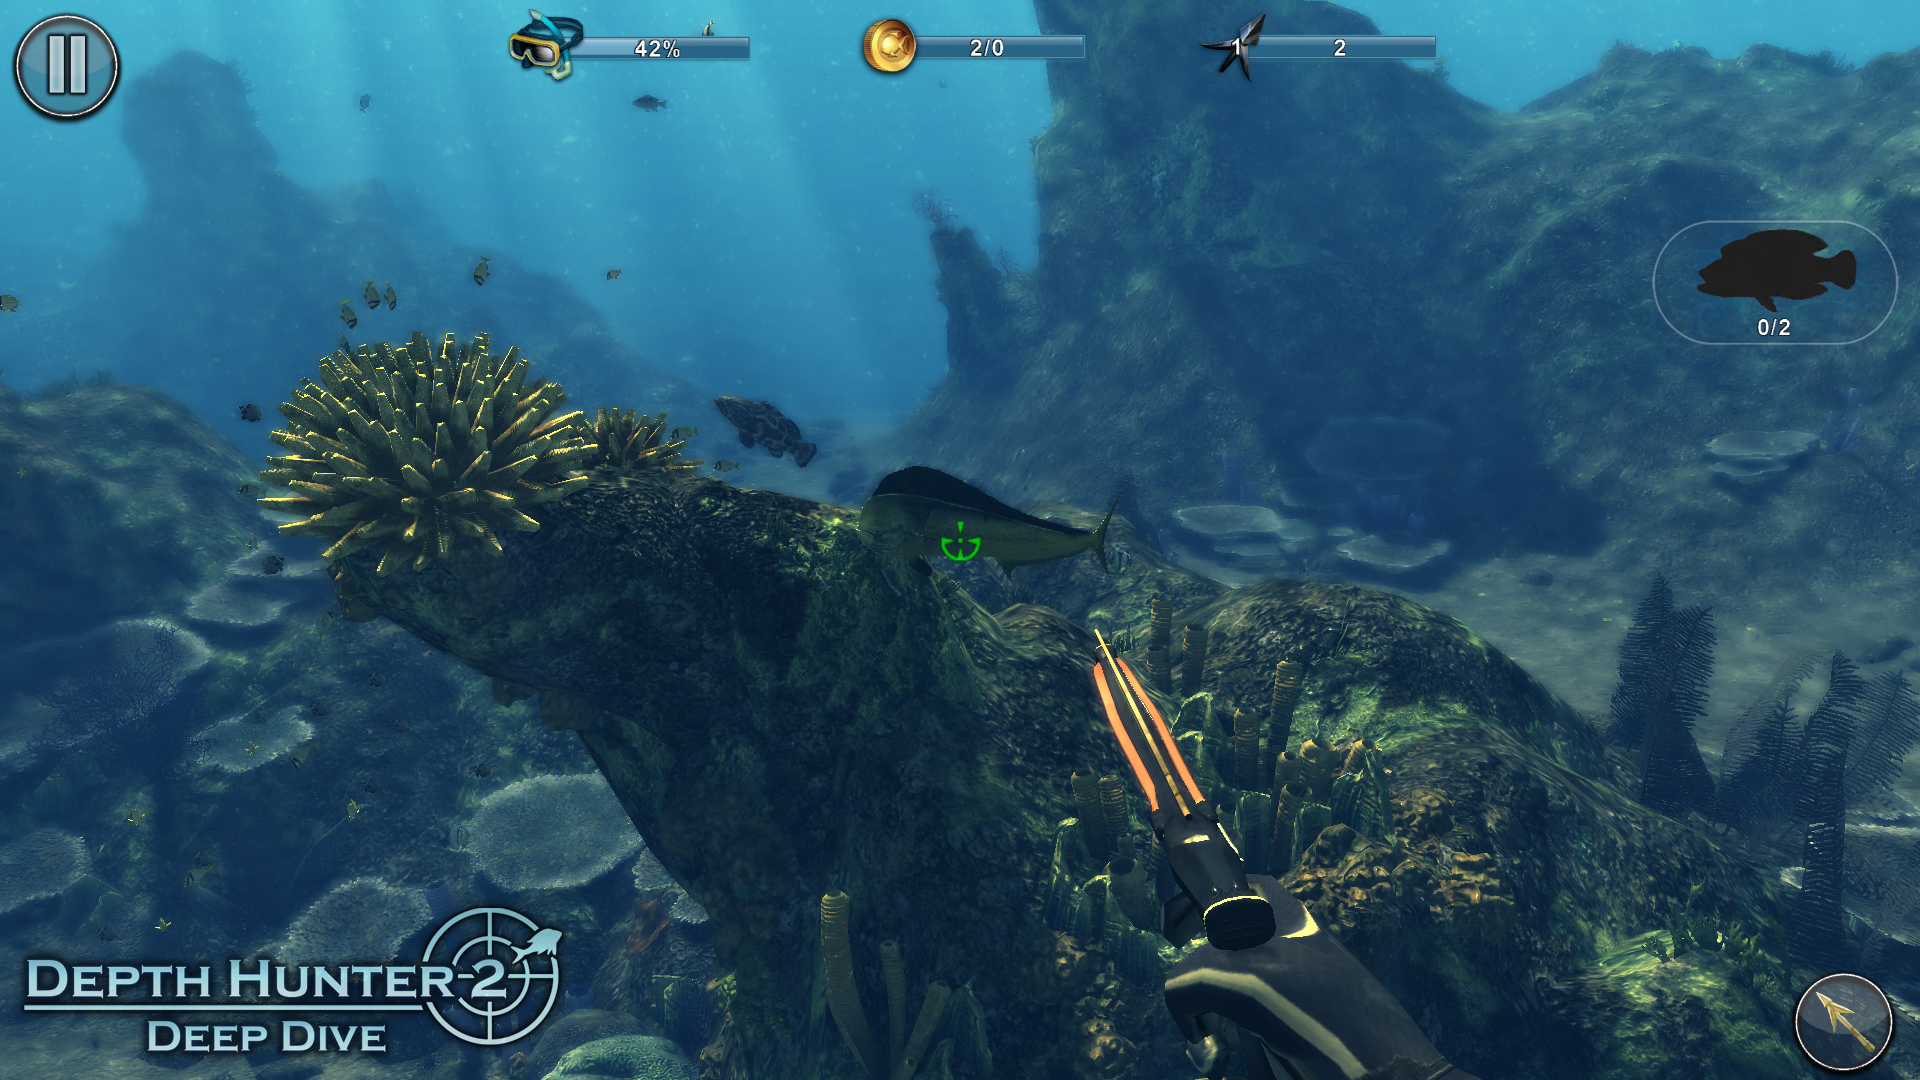 Save 75% on Depth Hunter 2: Deep Dive on Steam